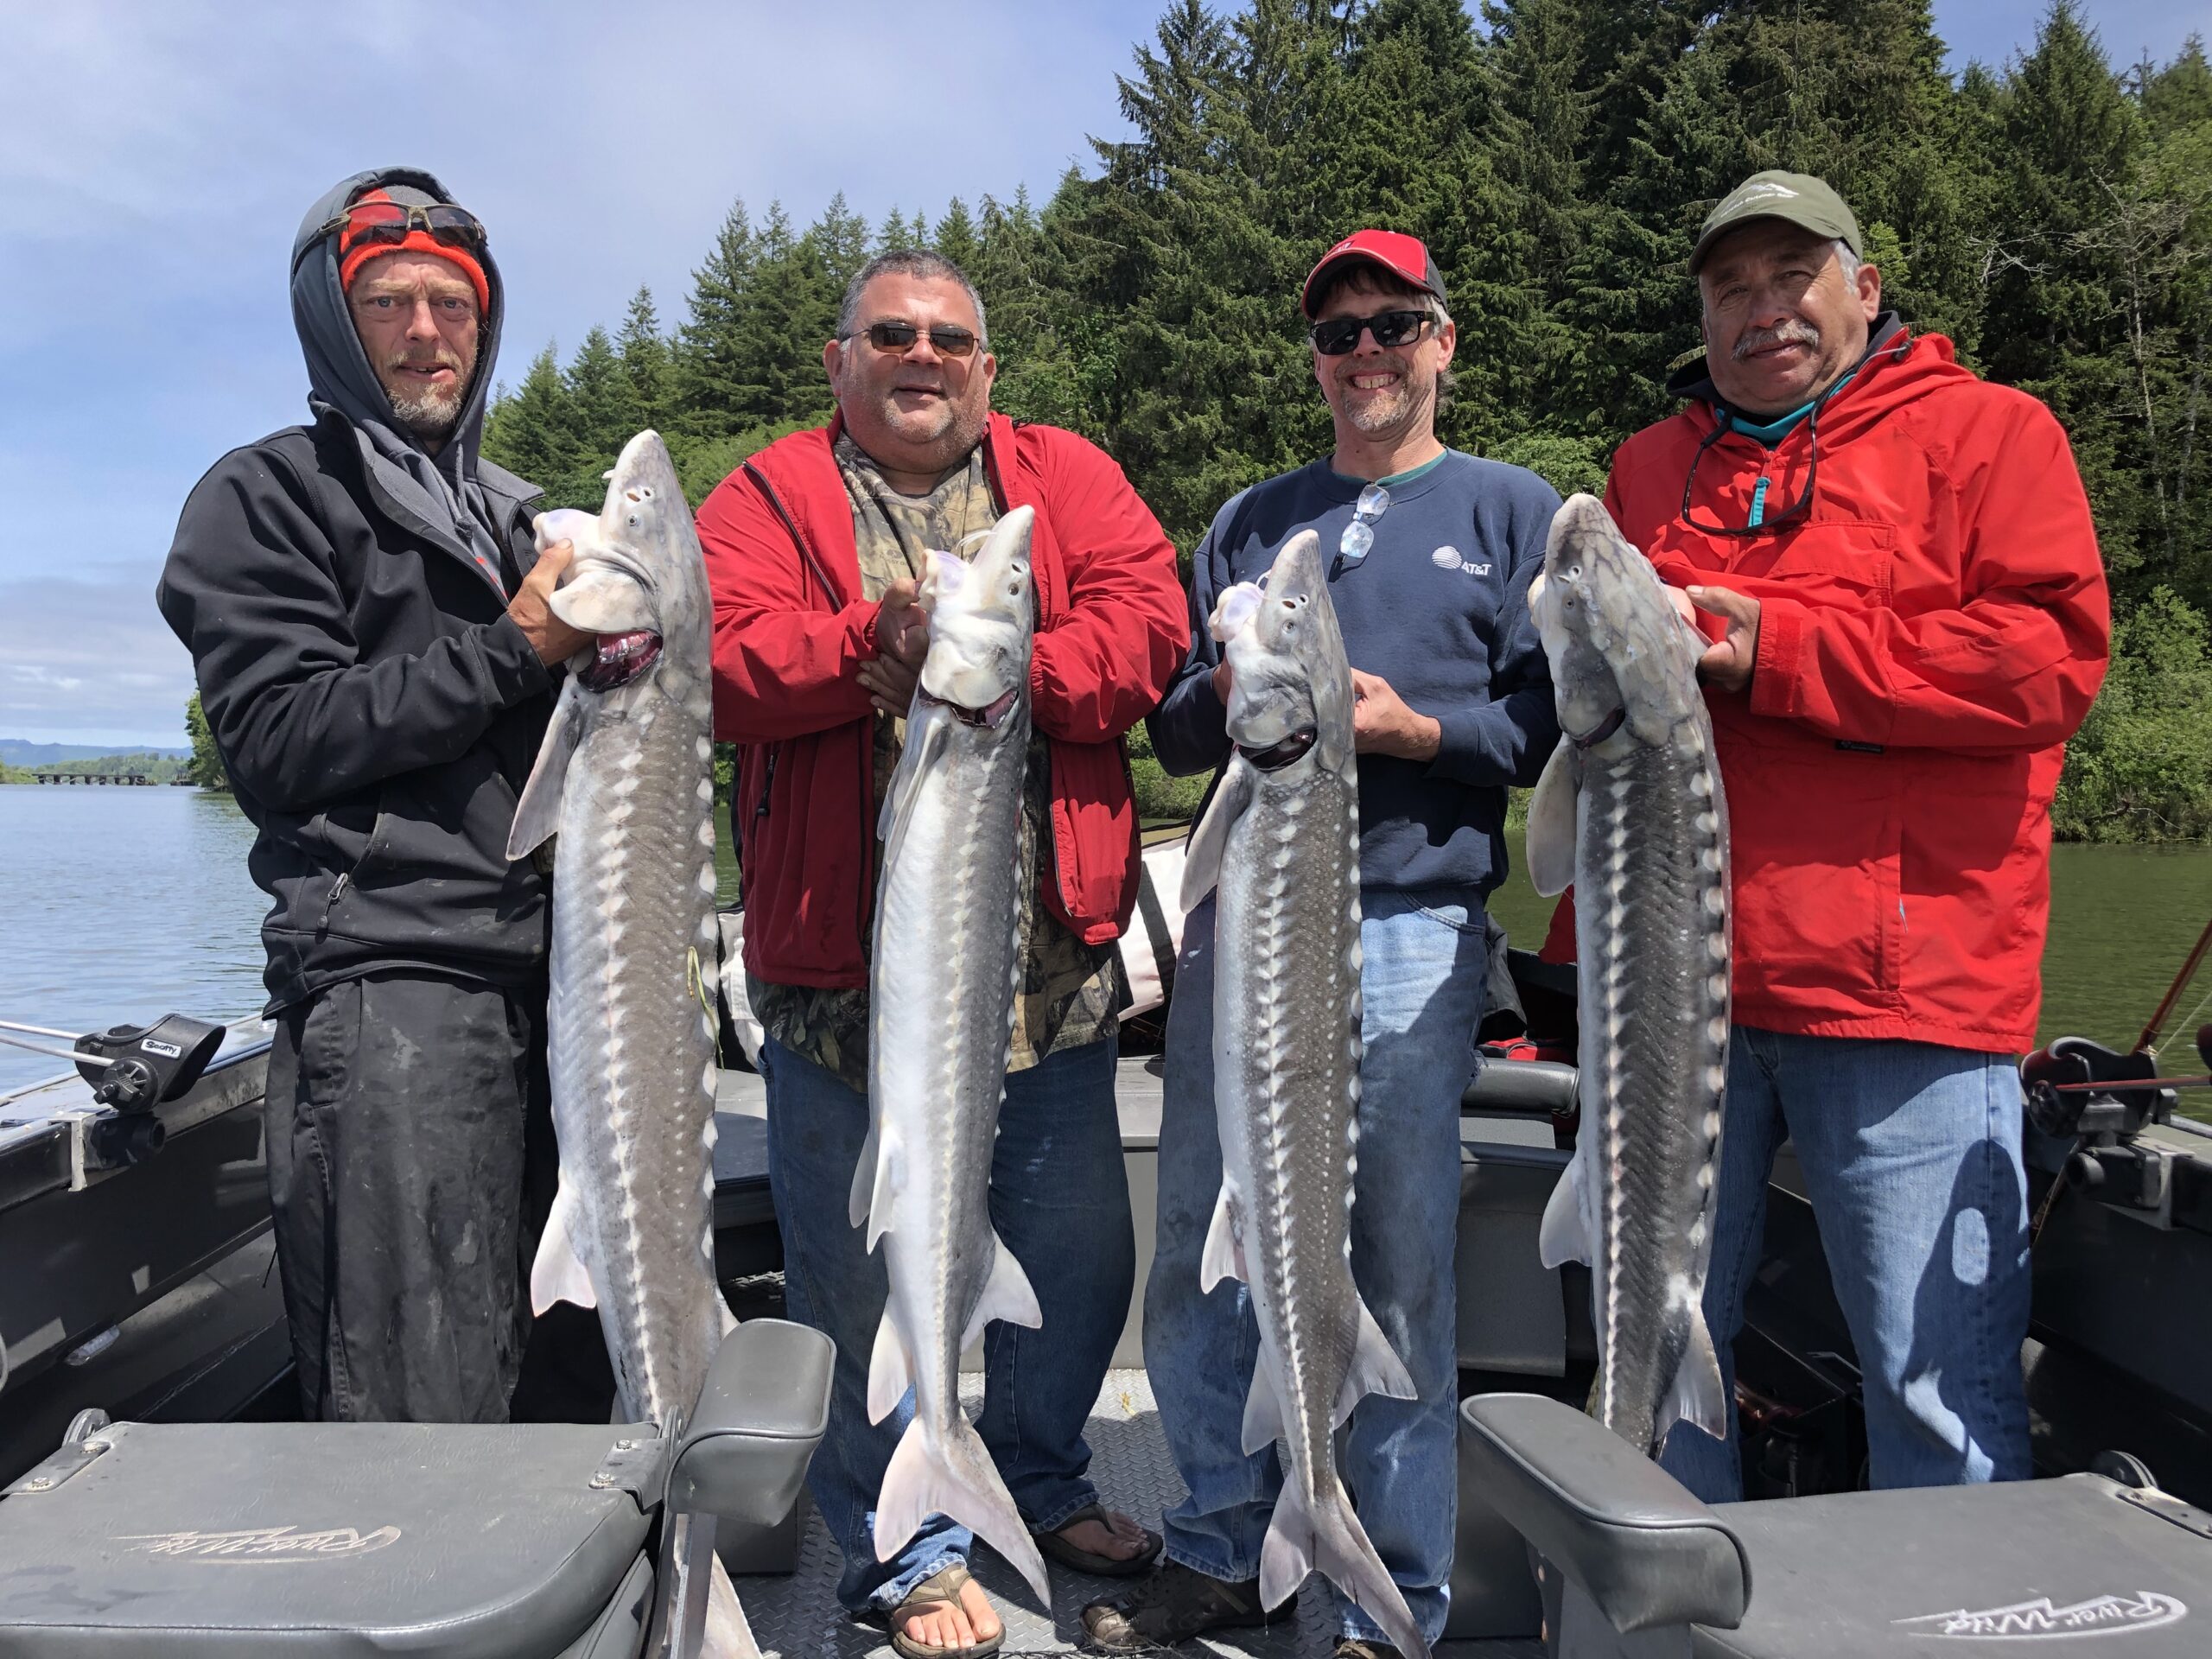 Columbia River Salmon Fishing: Find Sports Fishing Charters in WA & OR